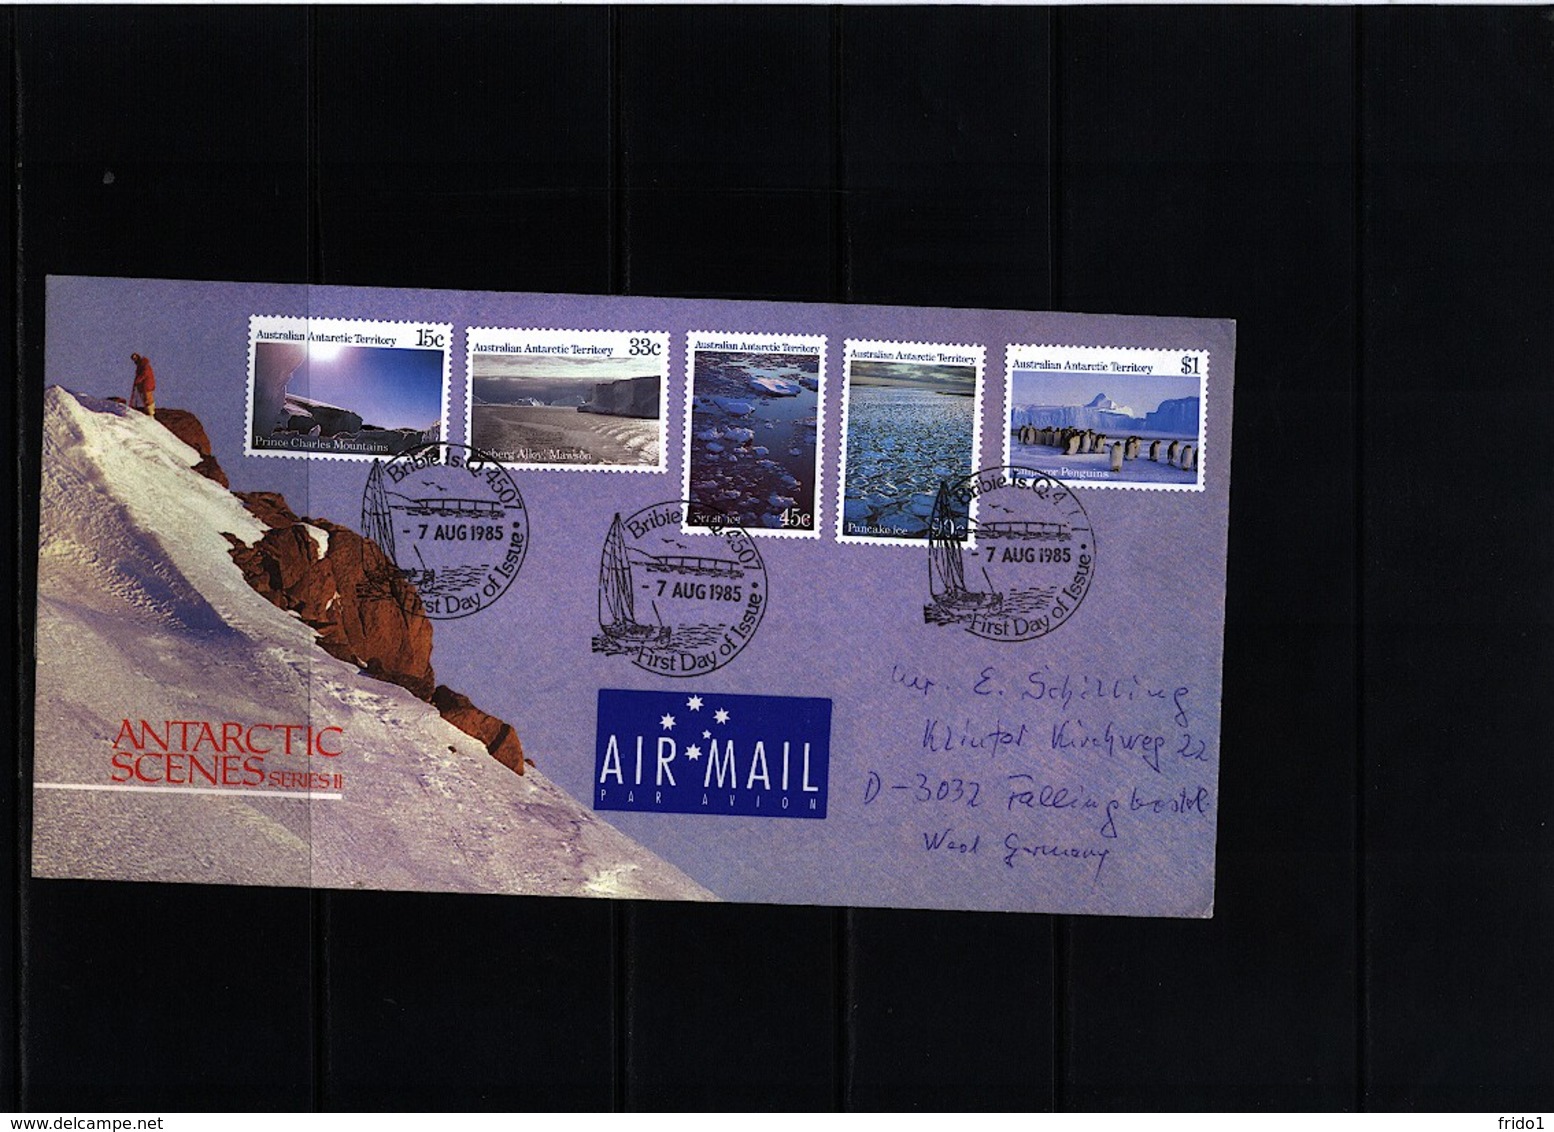 Australian Antarctic Territoriy 1985 Antarctic Scenes FDC - Covers & Documents